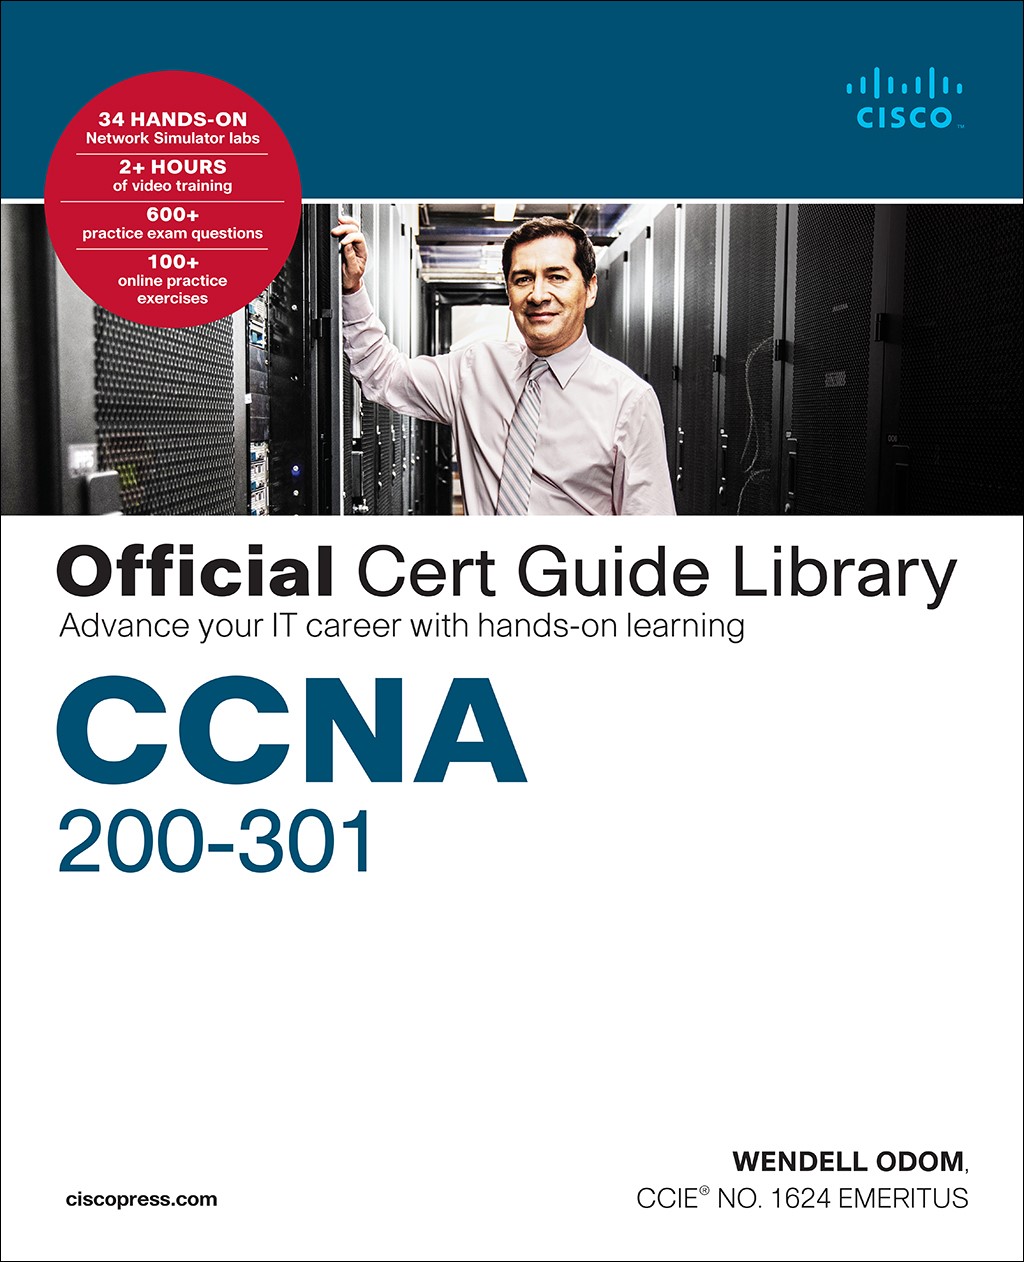 cisco ccna 200 301 book ccna books free download pdf Filmisfine